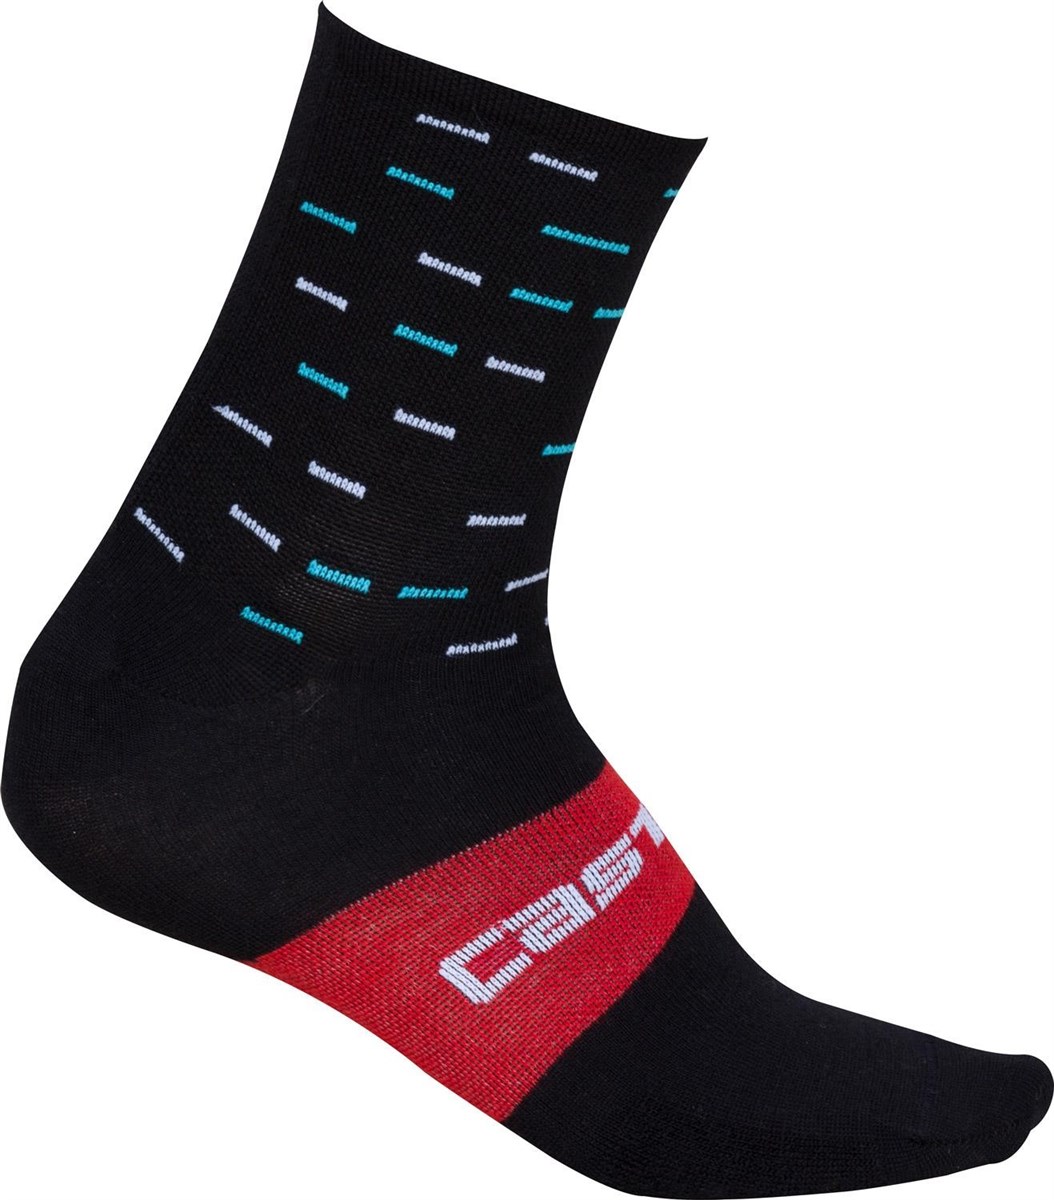 Castelli Team Sky Wool 13 Cycling Socks product image